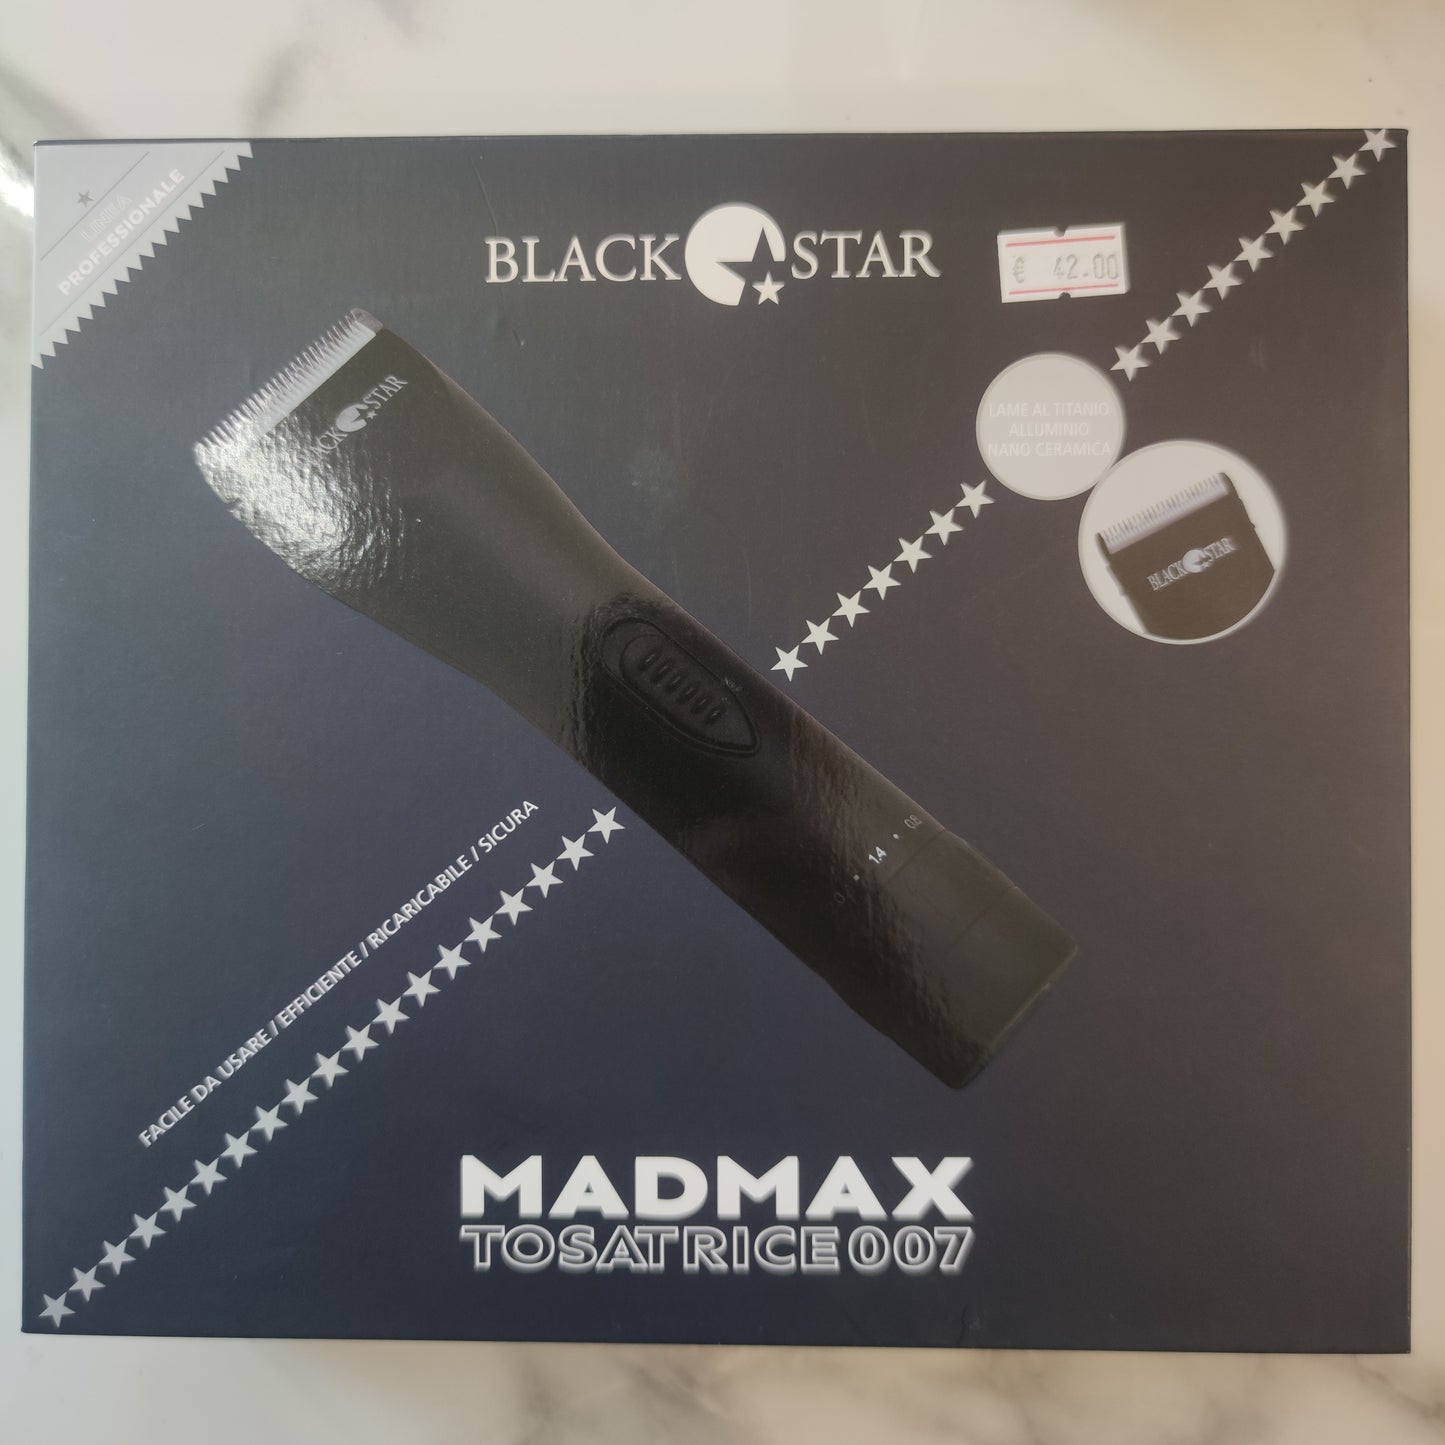 BLACKSTAR  MADMAX  007  TOSATRICE PROFESSIONALE CAPELLI - MR BEAUTY SALON 